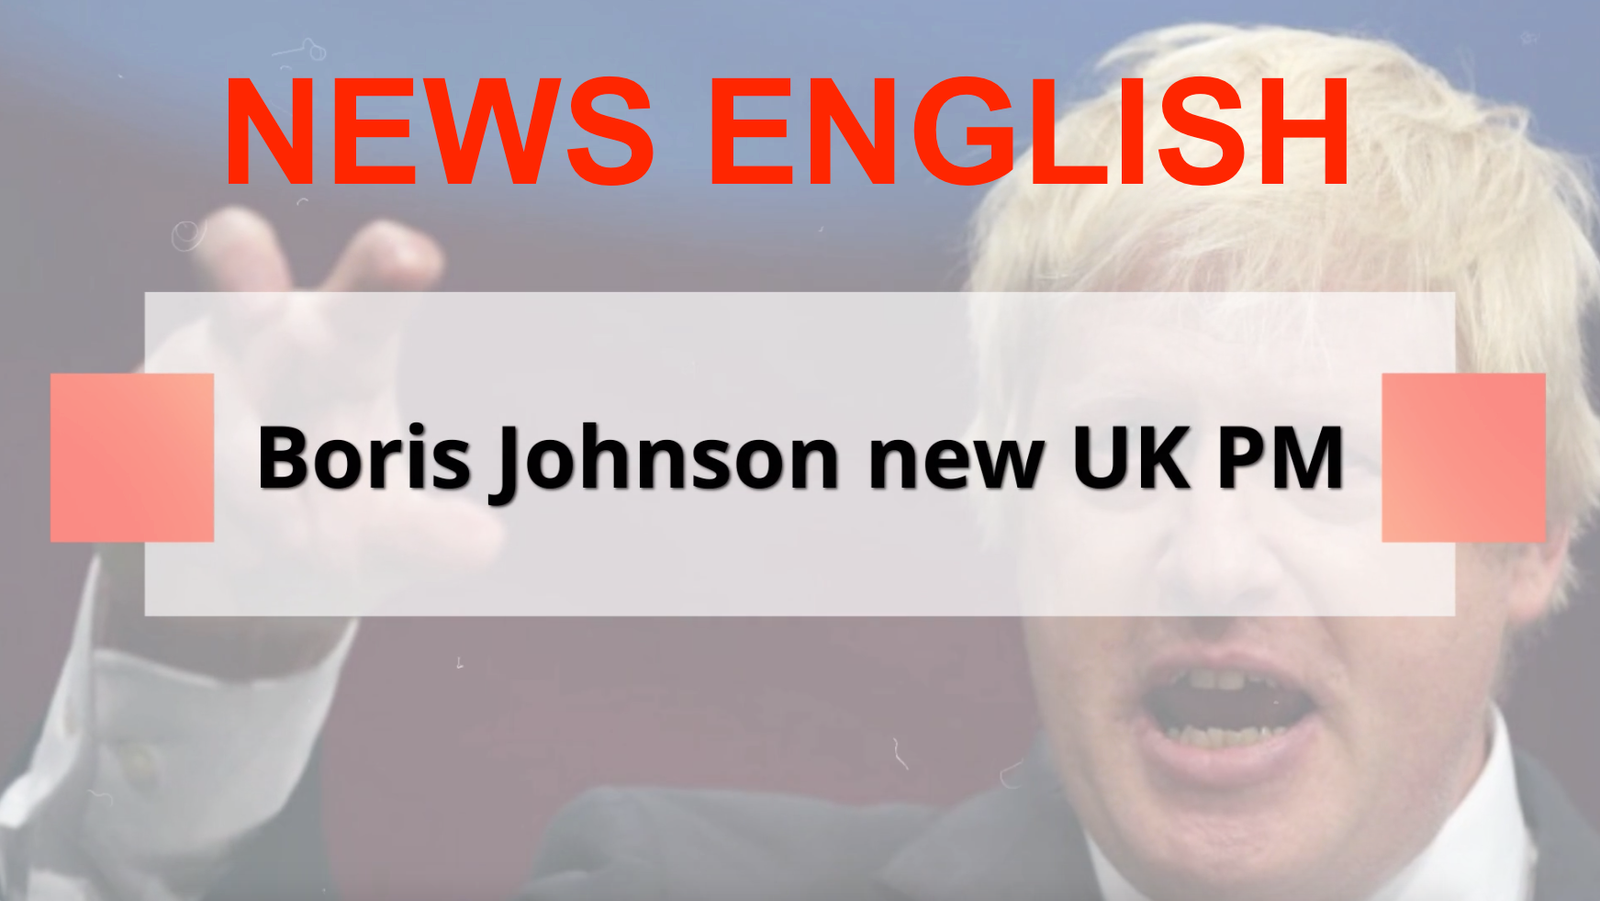 JOHNSON NEW UK PM